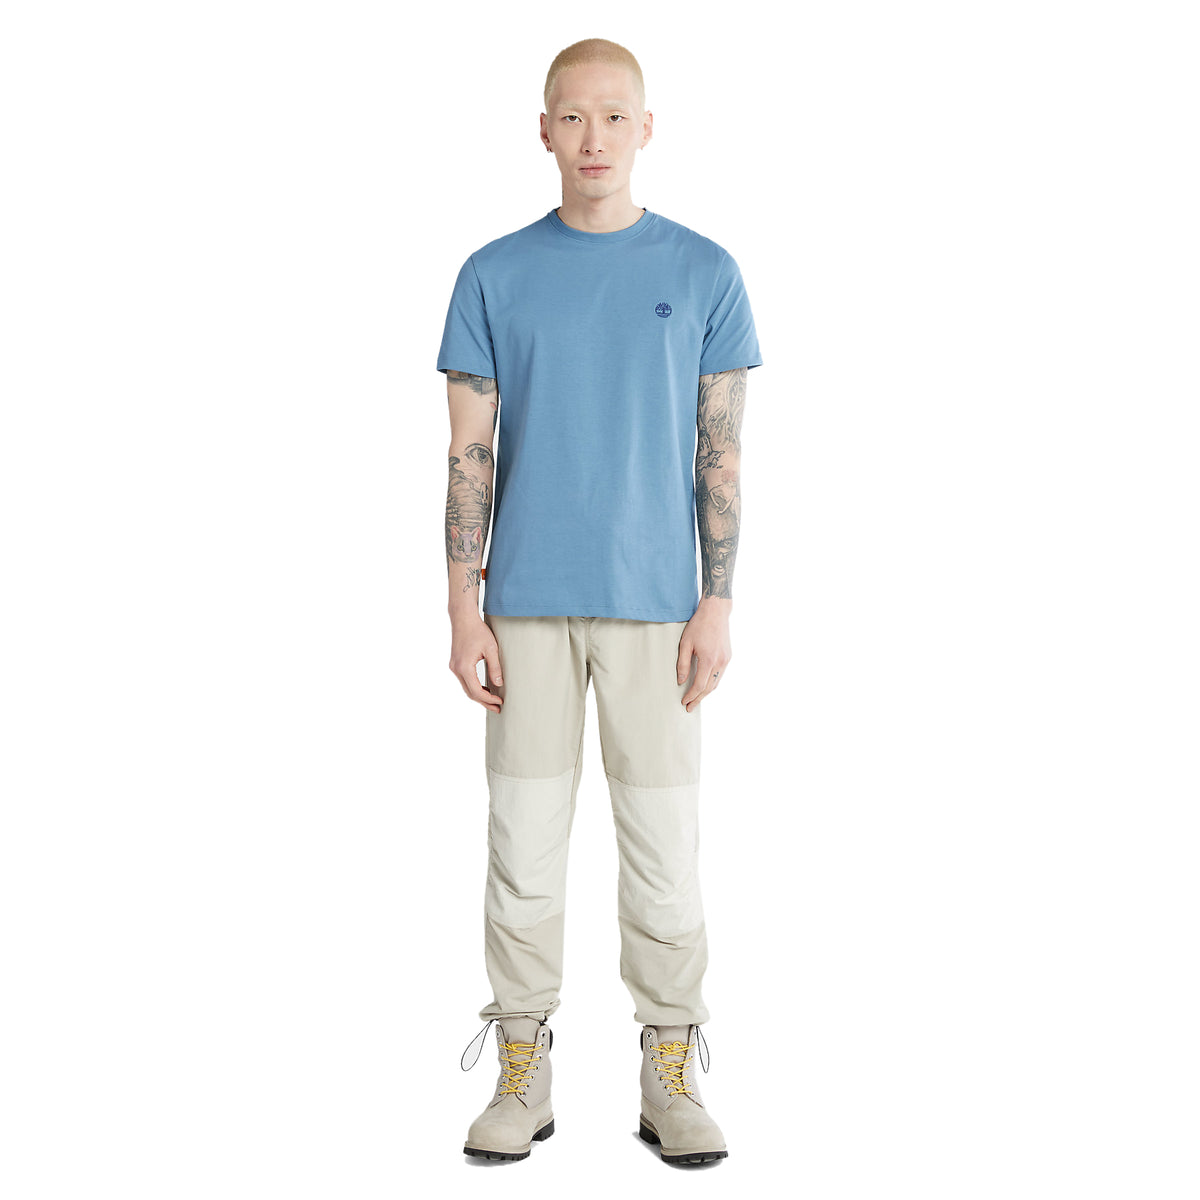 Timberland Mens Crew Neck T Shirt 'Dunstan River Jersey Crew' Slim Fit - Short Sleeved, 03, Tb0A2Bpr, Moonlight Blue